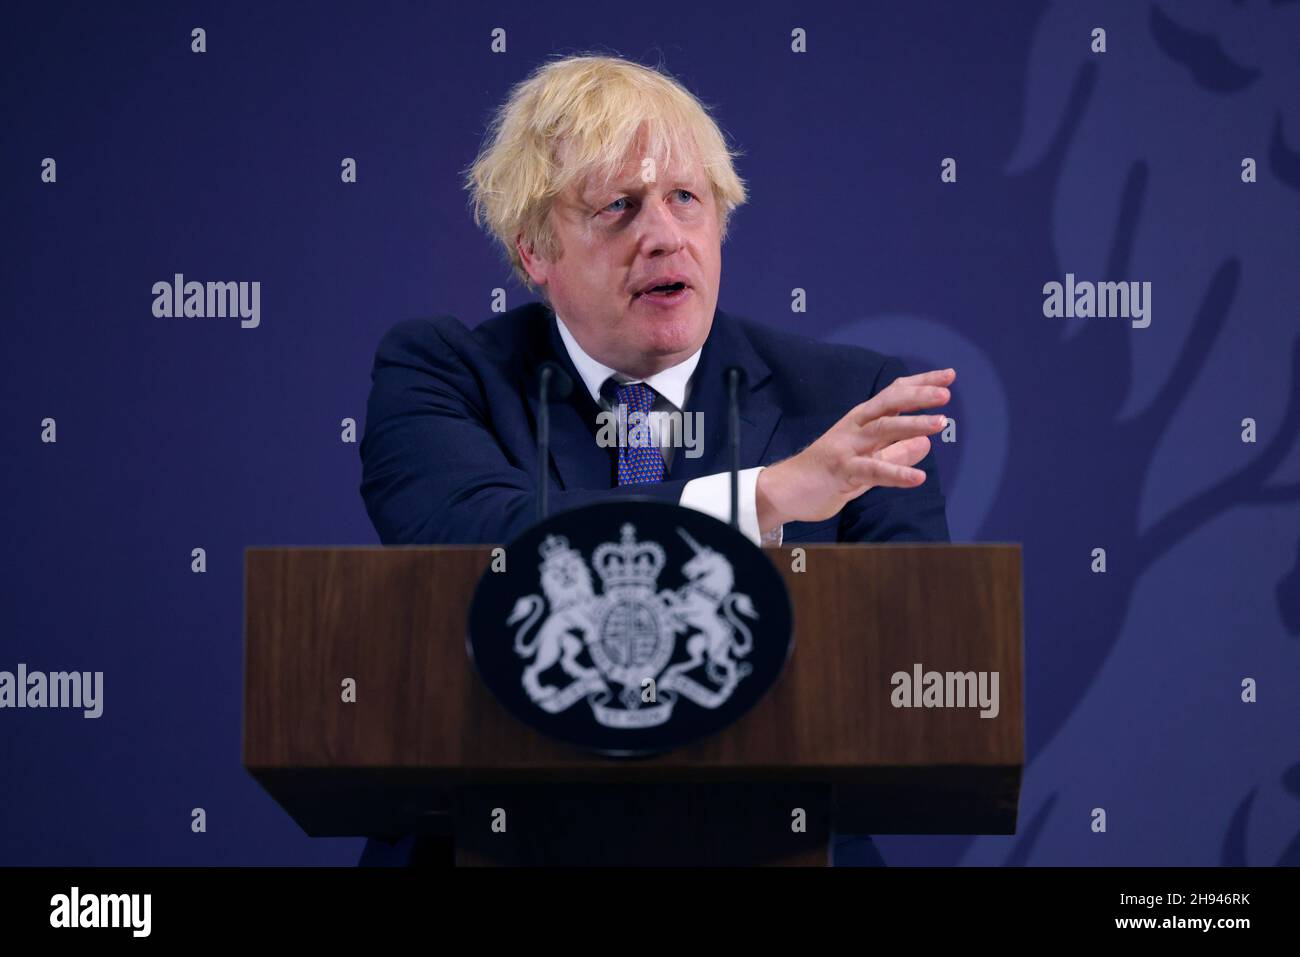 COVENTRY, INGLATERRA, Reino Unido - 15 de julio de 2021 - Primer Ministro del Reino Unido Boris Johnson Leveling Up Speech. El primer ministro Boris Johnson visita la UKBIC para entregar un Foto de stock